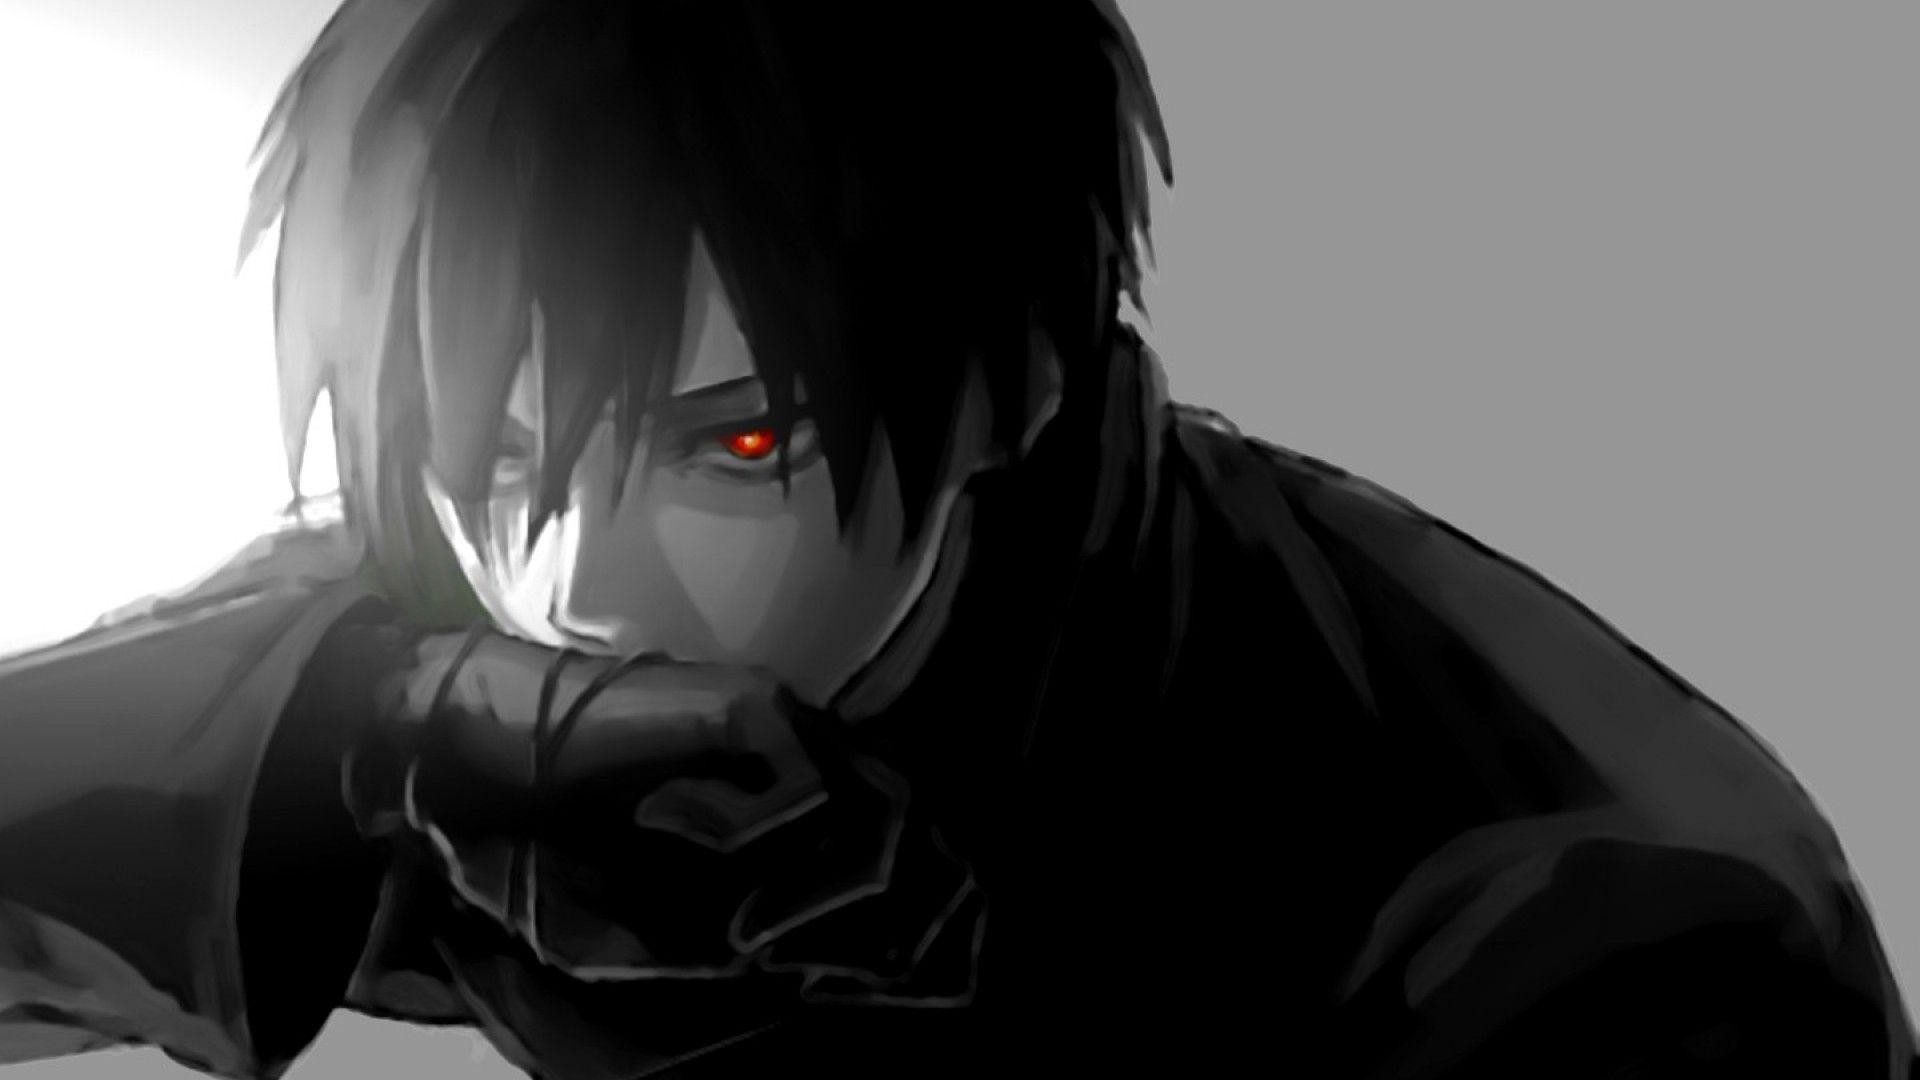 Depressed Anime Boy Pfp  Top 20 Depressed Anime Boy Profile Pictures Pfp  Avatar Dp icon  HQ 